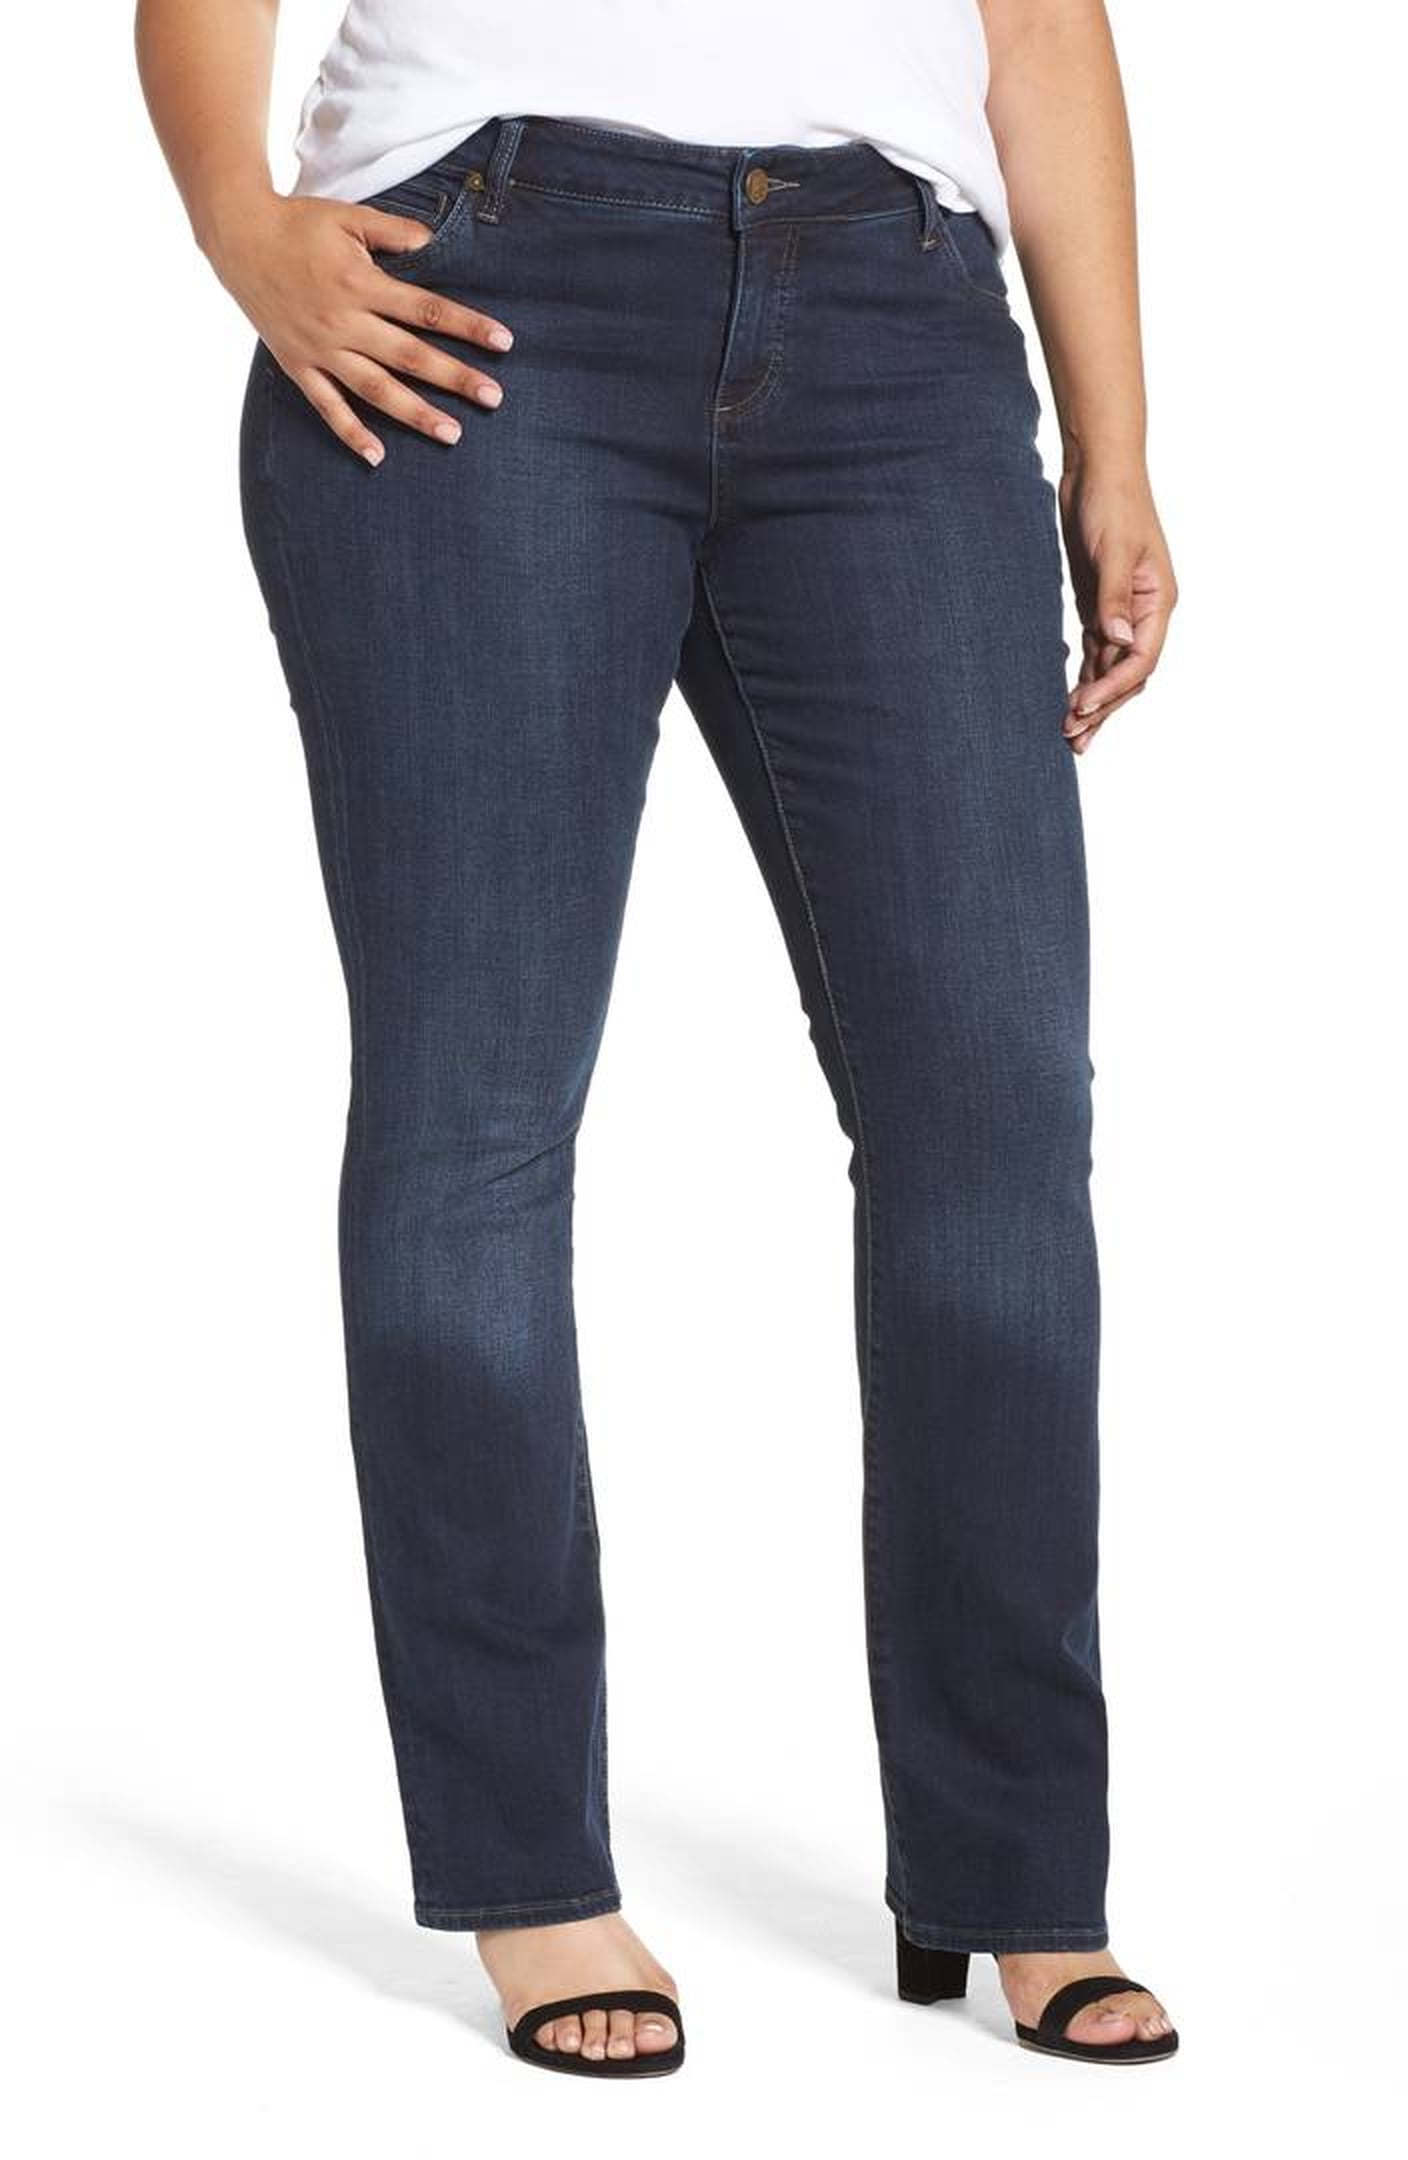 Jennifer Aniston Wearing Bootcut Jeans | POPSUGAR Fashion